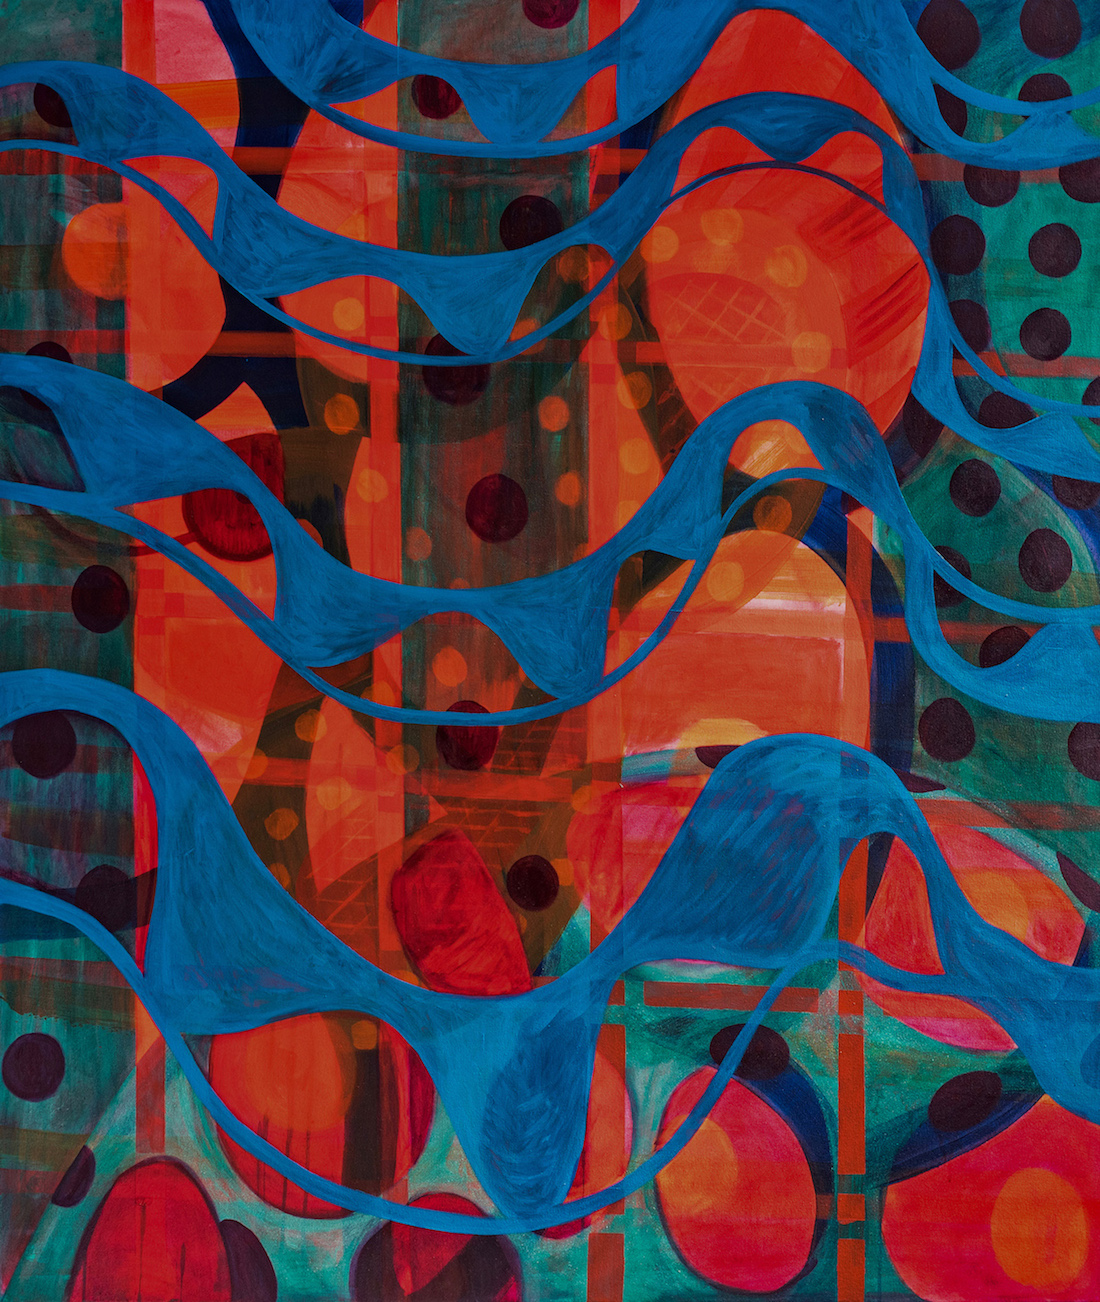 'Drifters', Amanda Houchen, Oil and acrylic on canvas, 150 x 125 cm